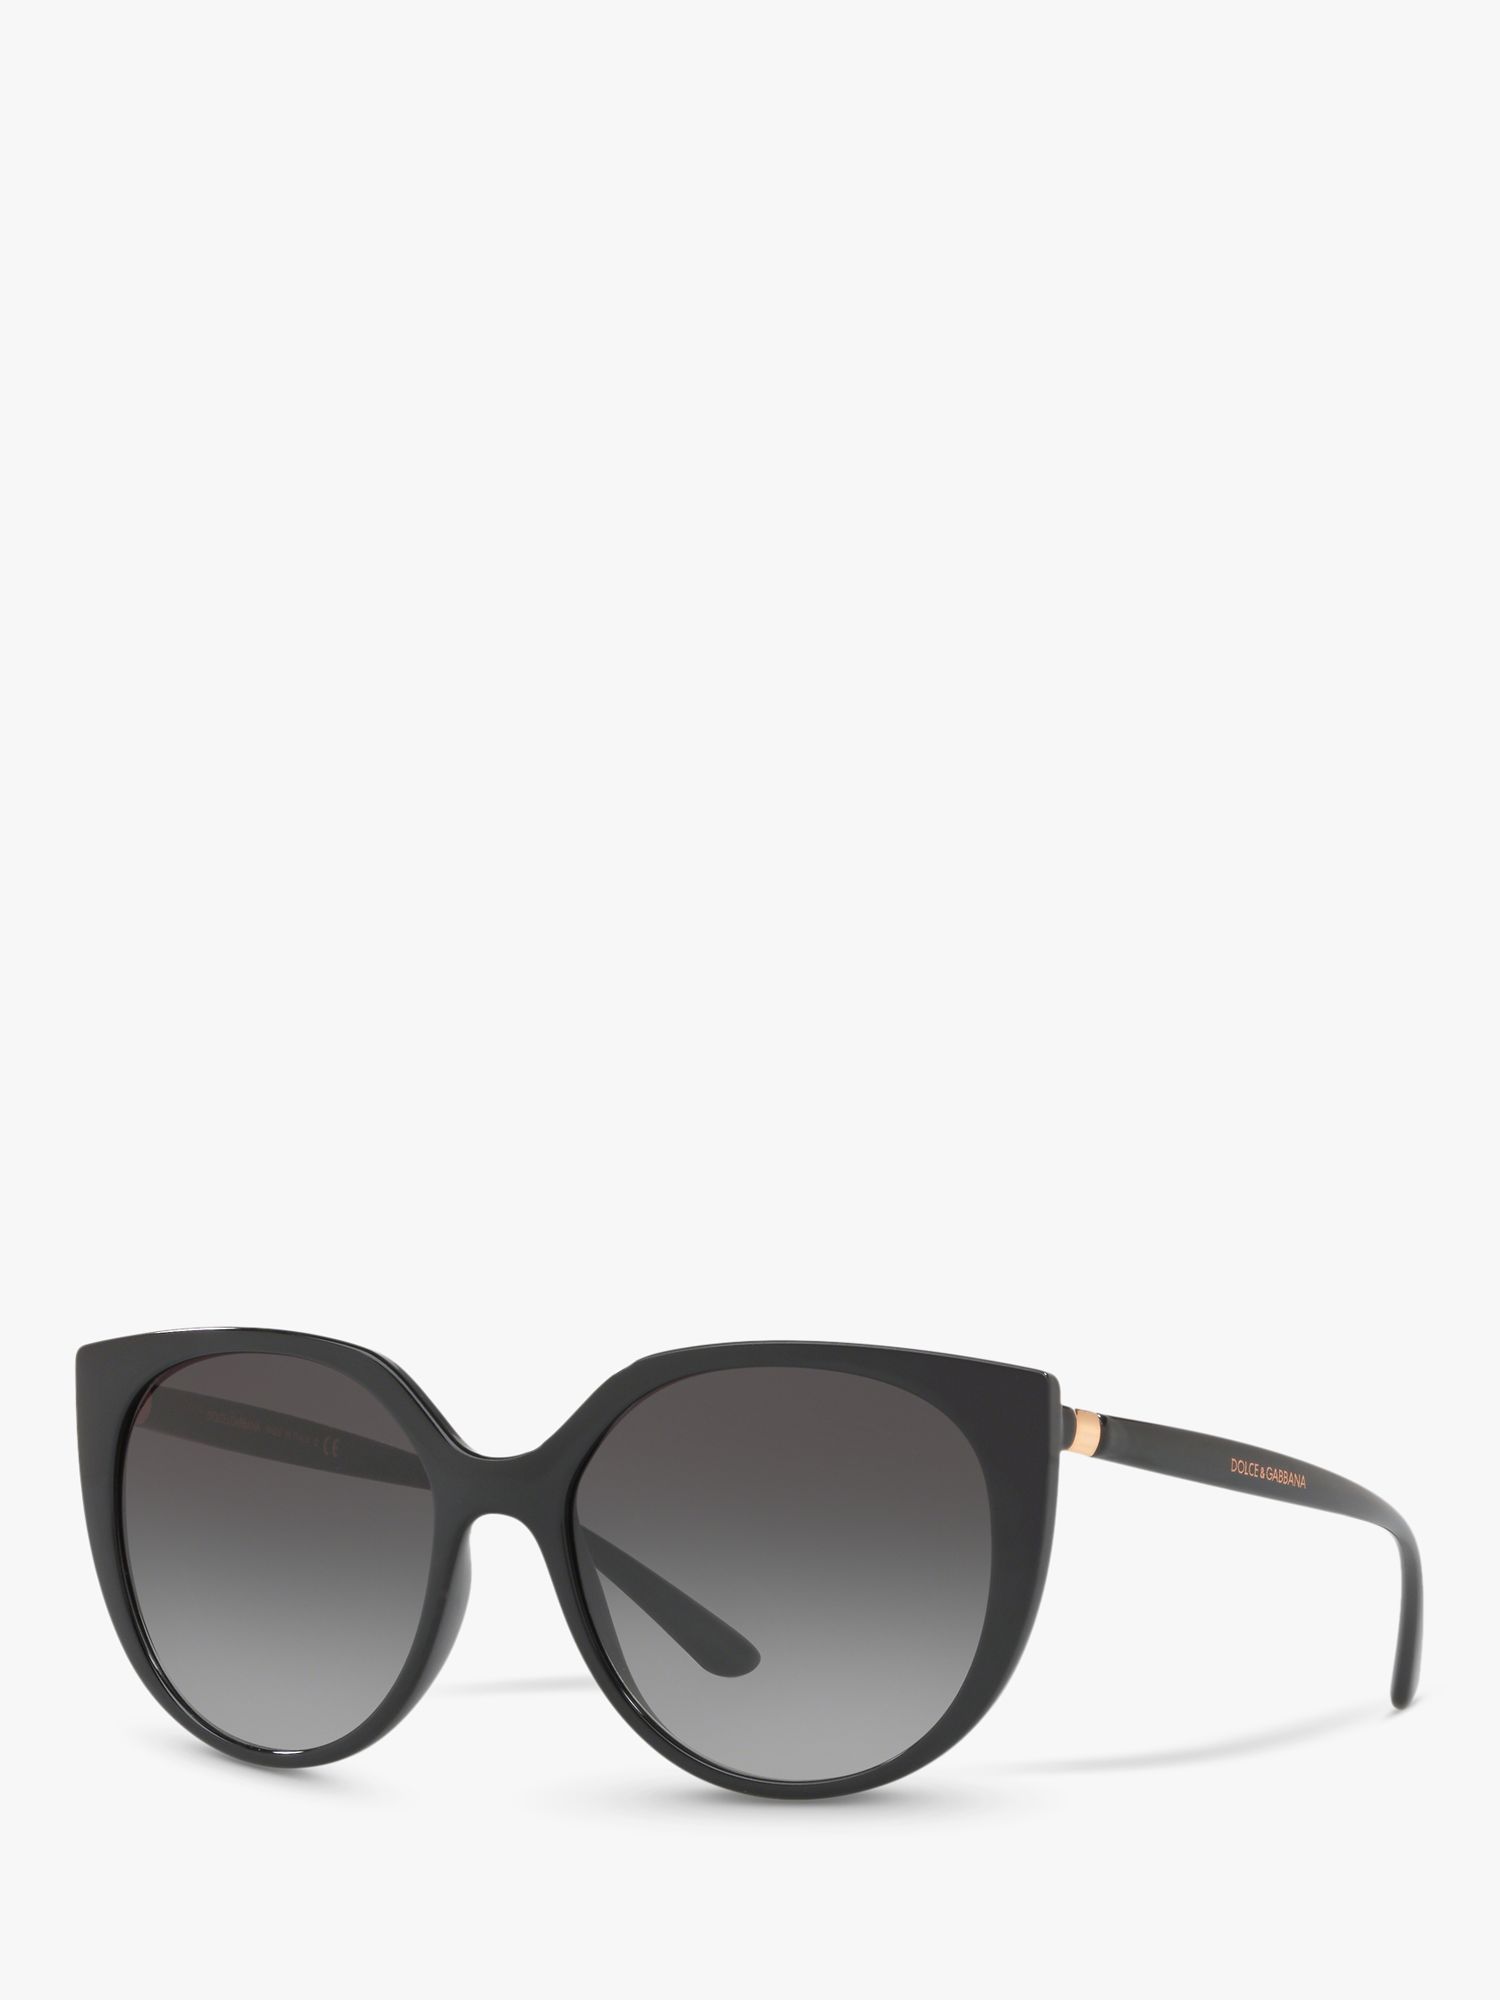 Dolce & Gabbana DG6119 Women's Oval Sunglasses, Matte Black/Grey Gradient  at John Lewis & Partners